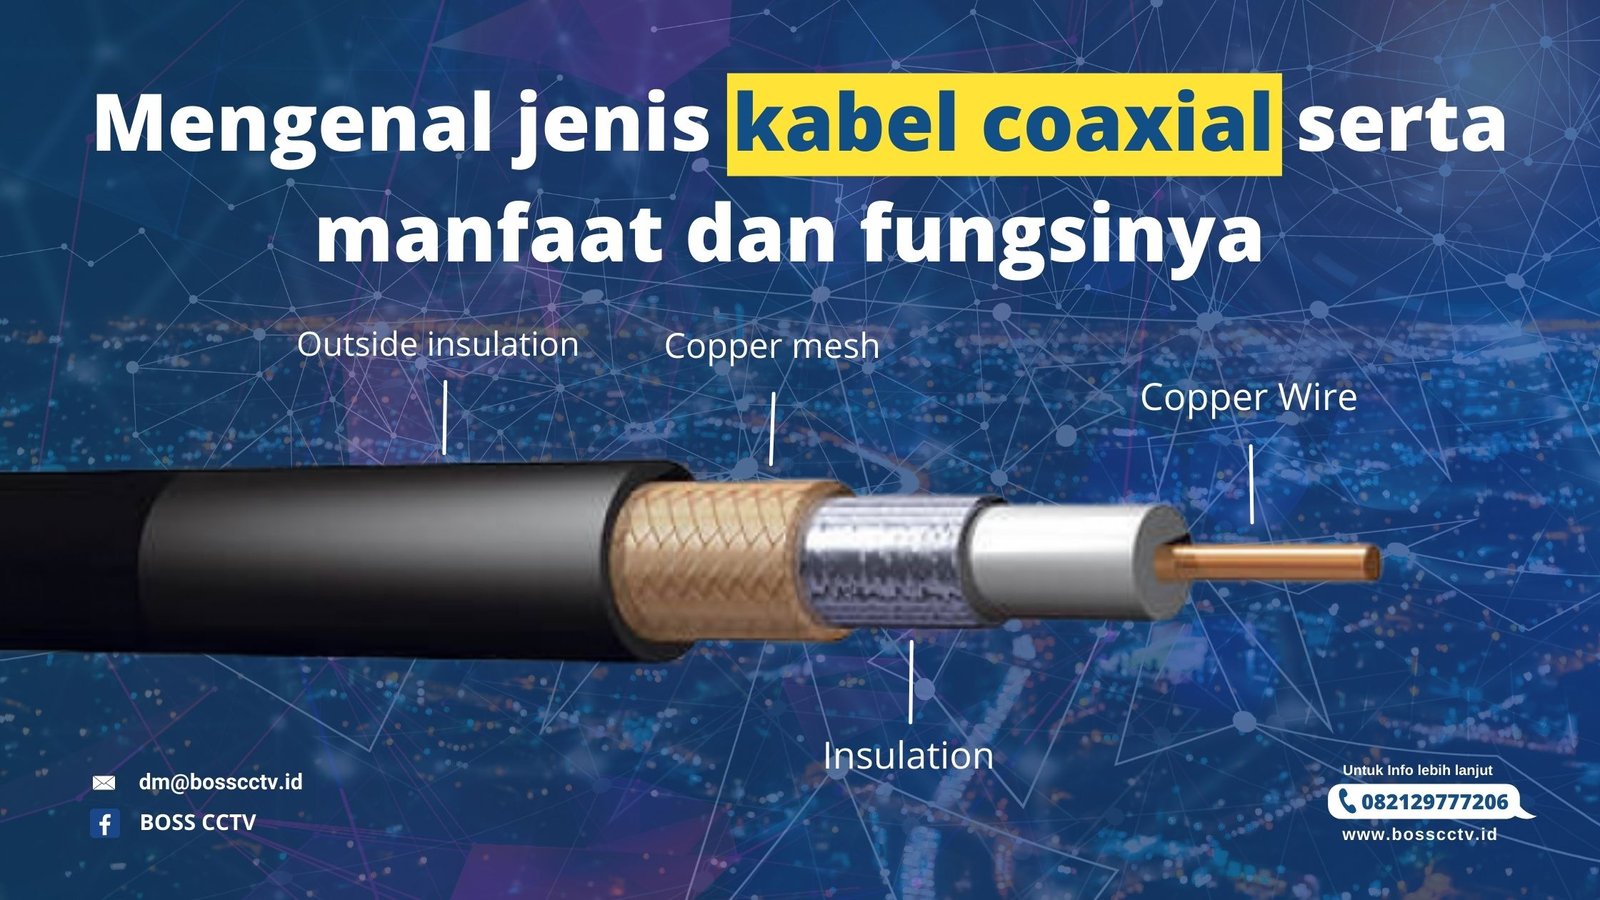 Mengenal jenis kabel coaxial serta manfaat dan fungsinya